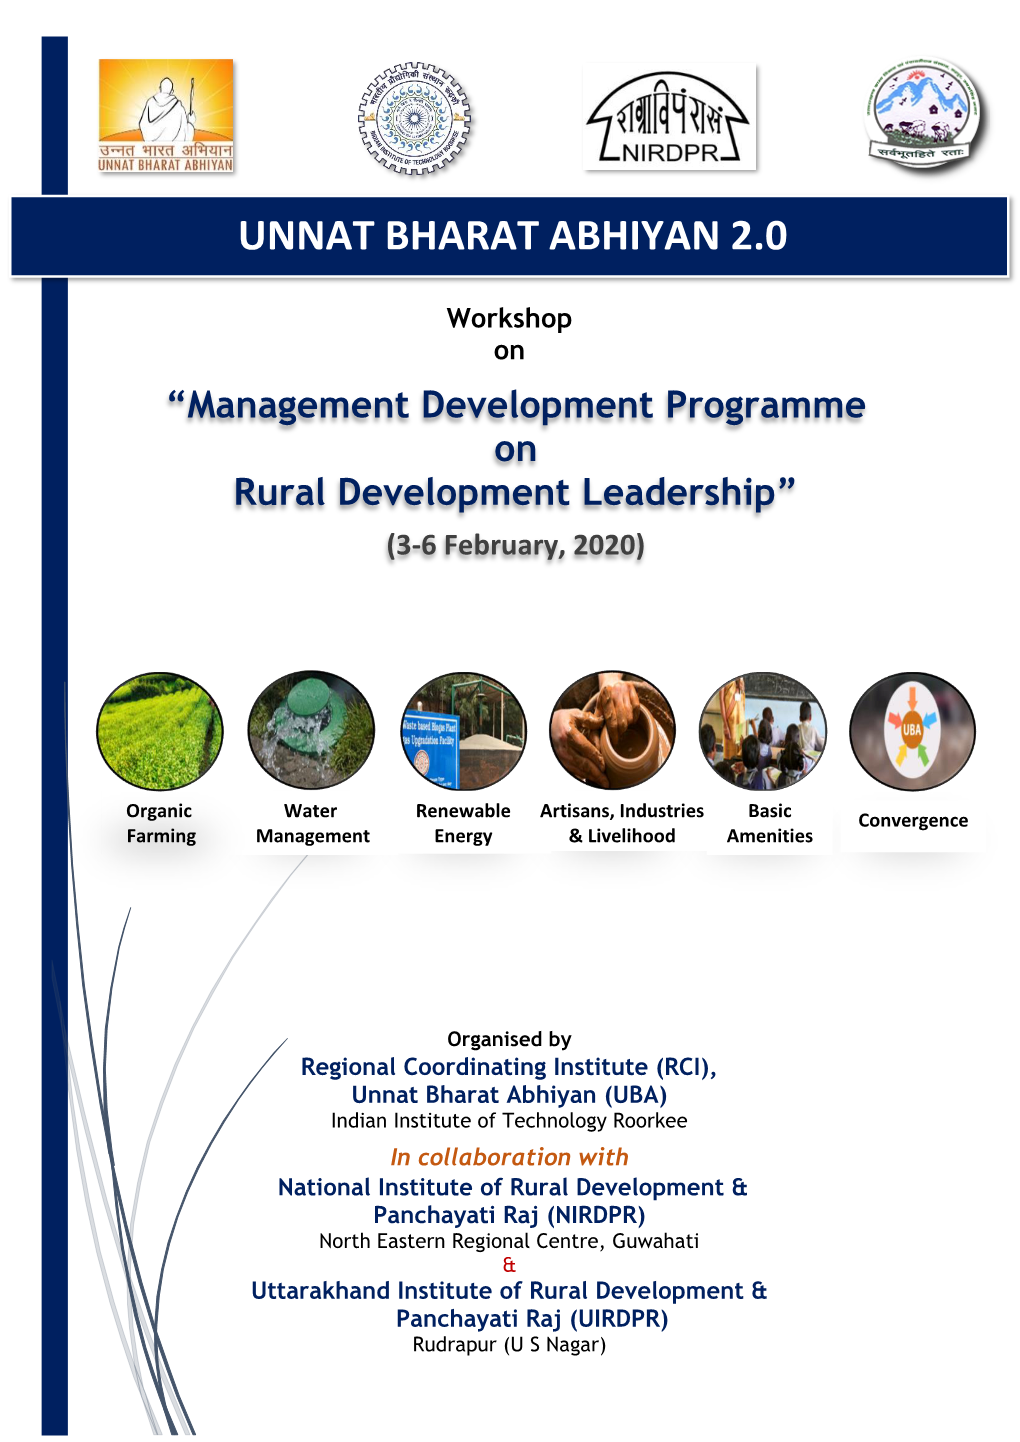 “Management Development Programme on Rural Development Leadership”